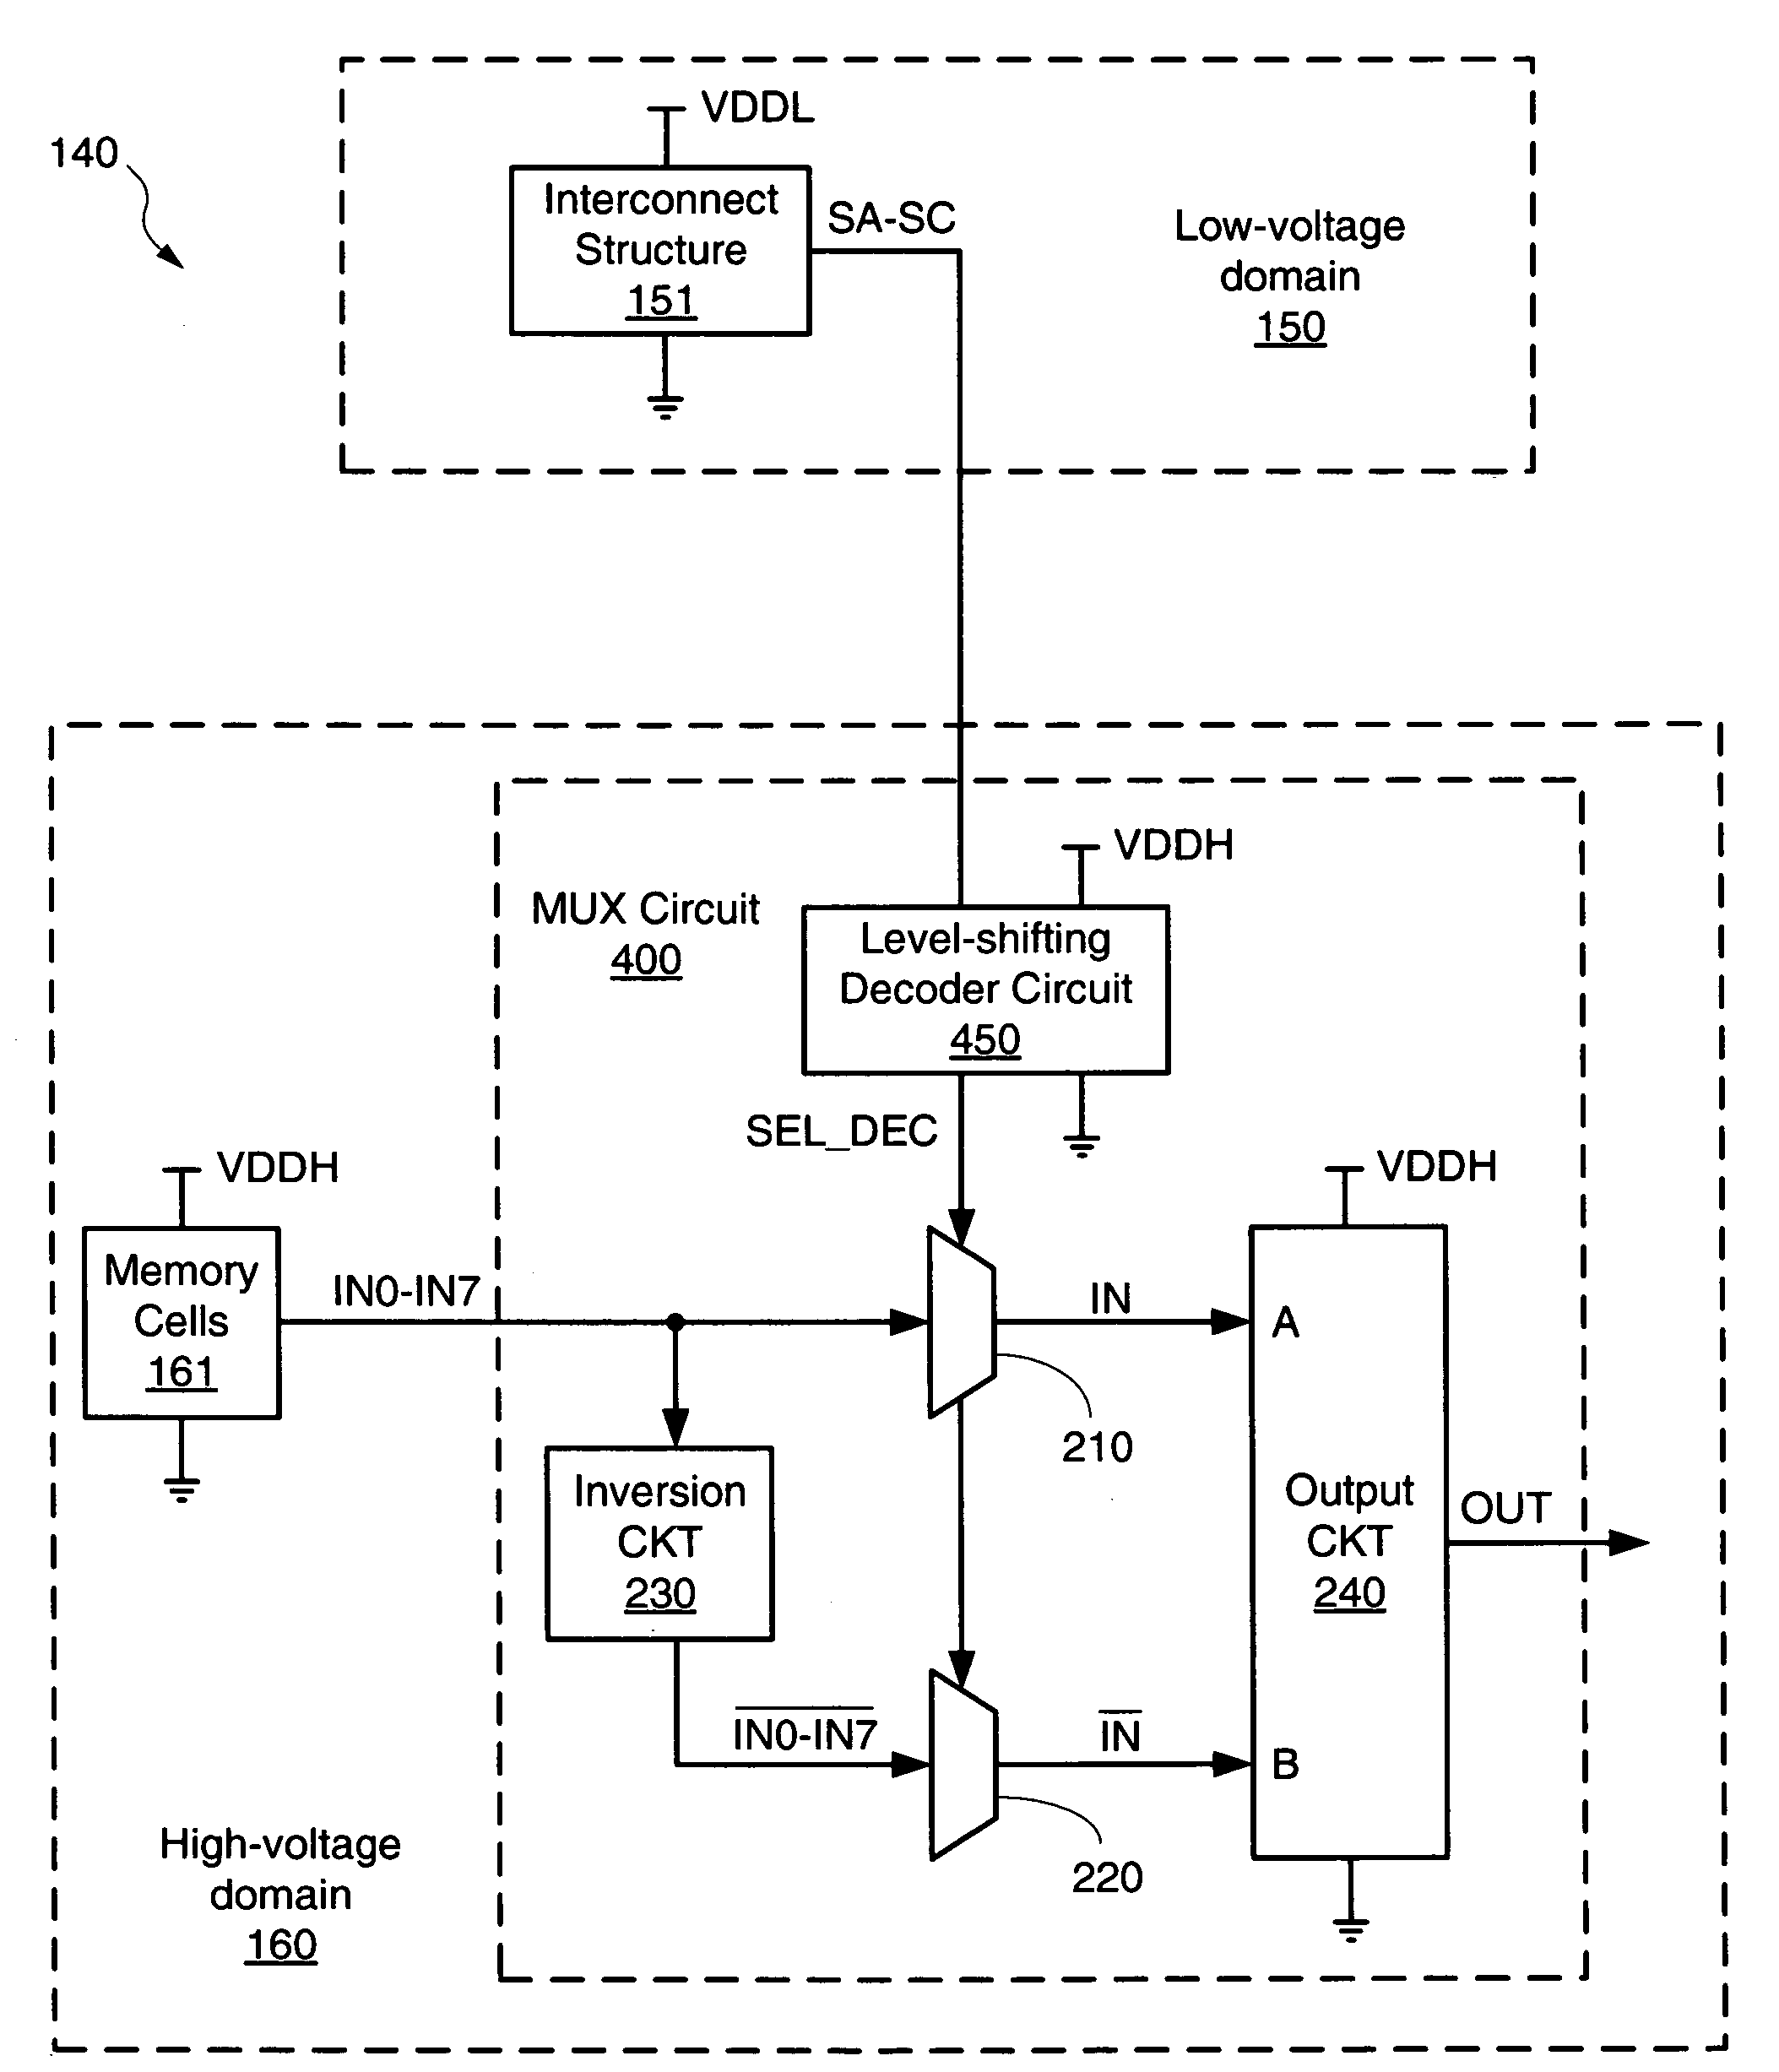 Level-shifting pass gate multiplexer